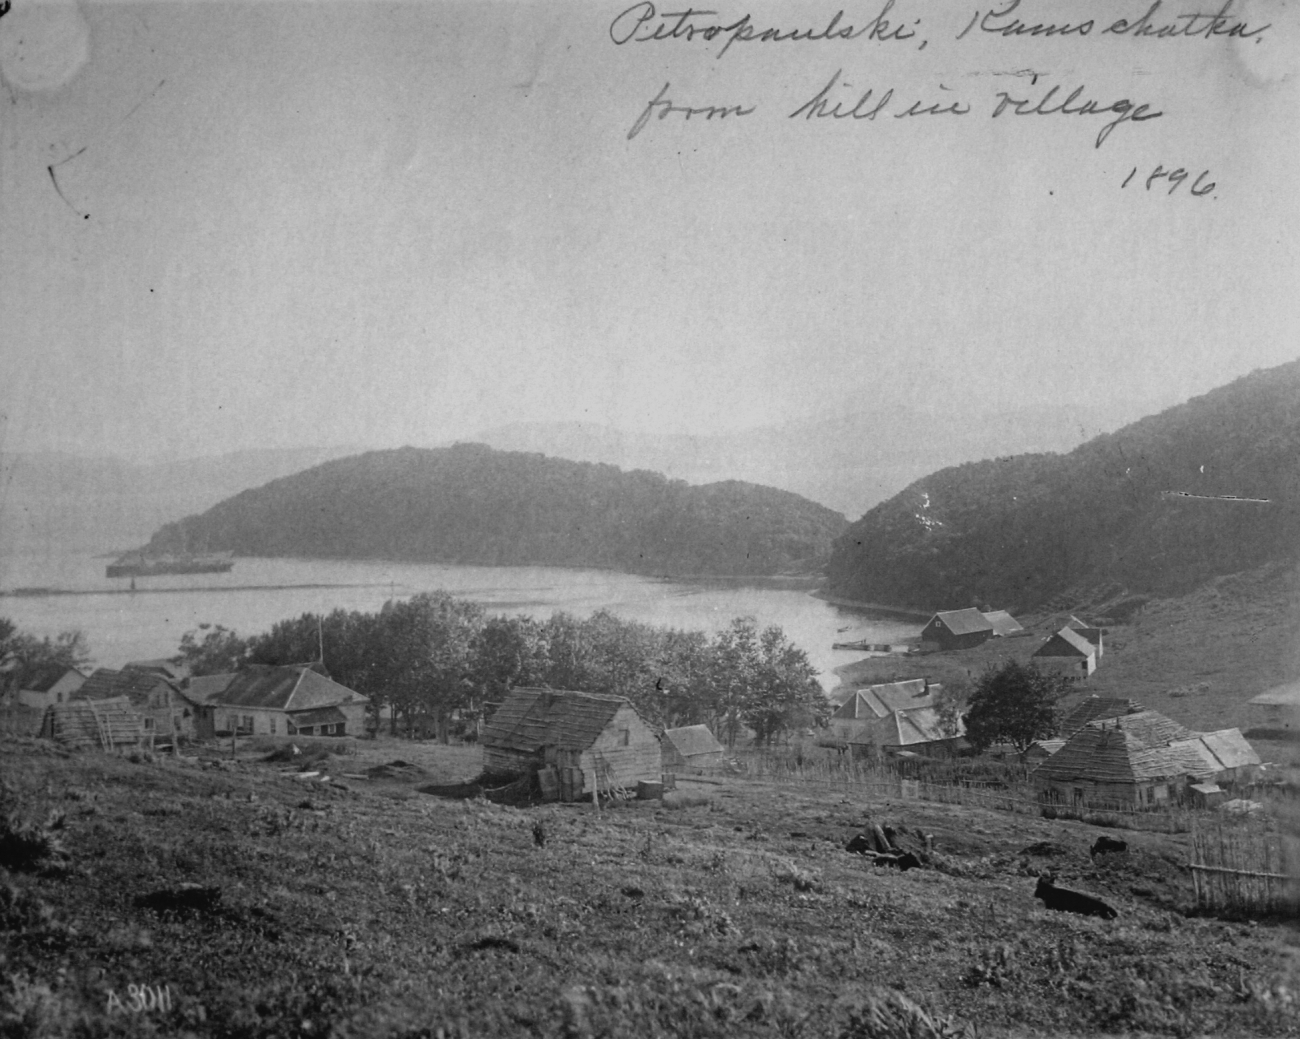 Petropaulski, Kamchatka, from hill in village, 1896